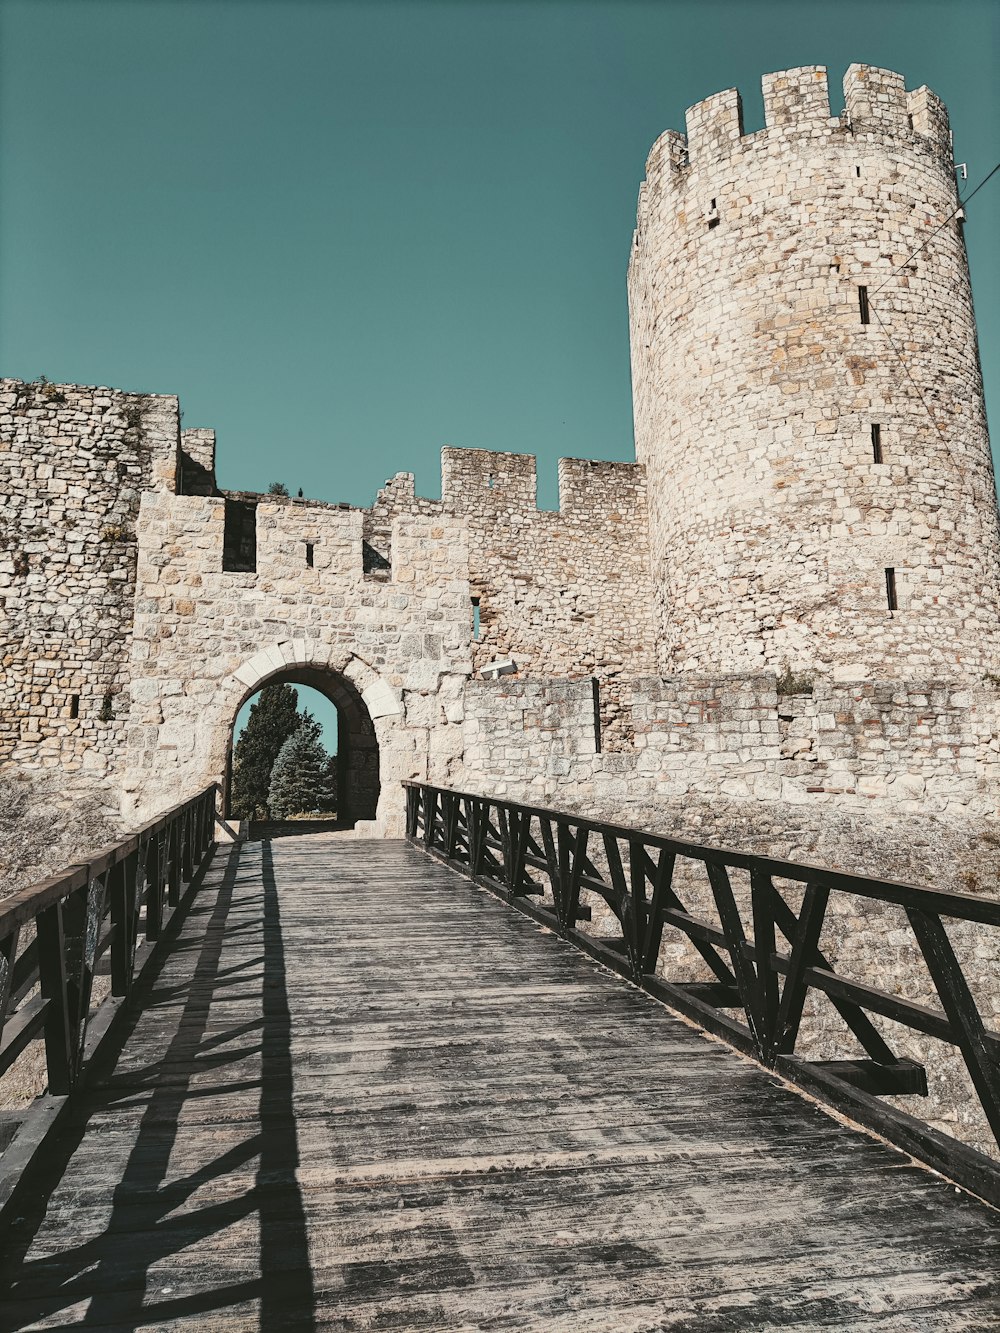 a wooden bridge leading to a stone castle